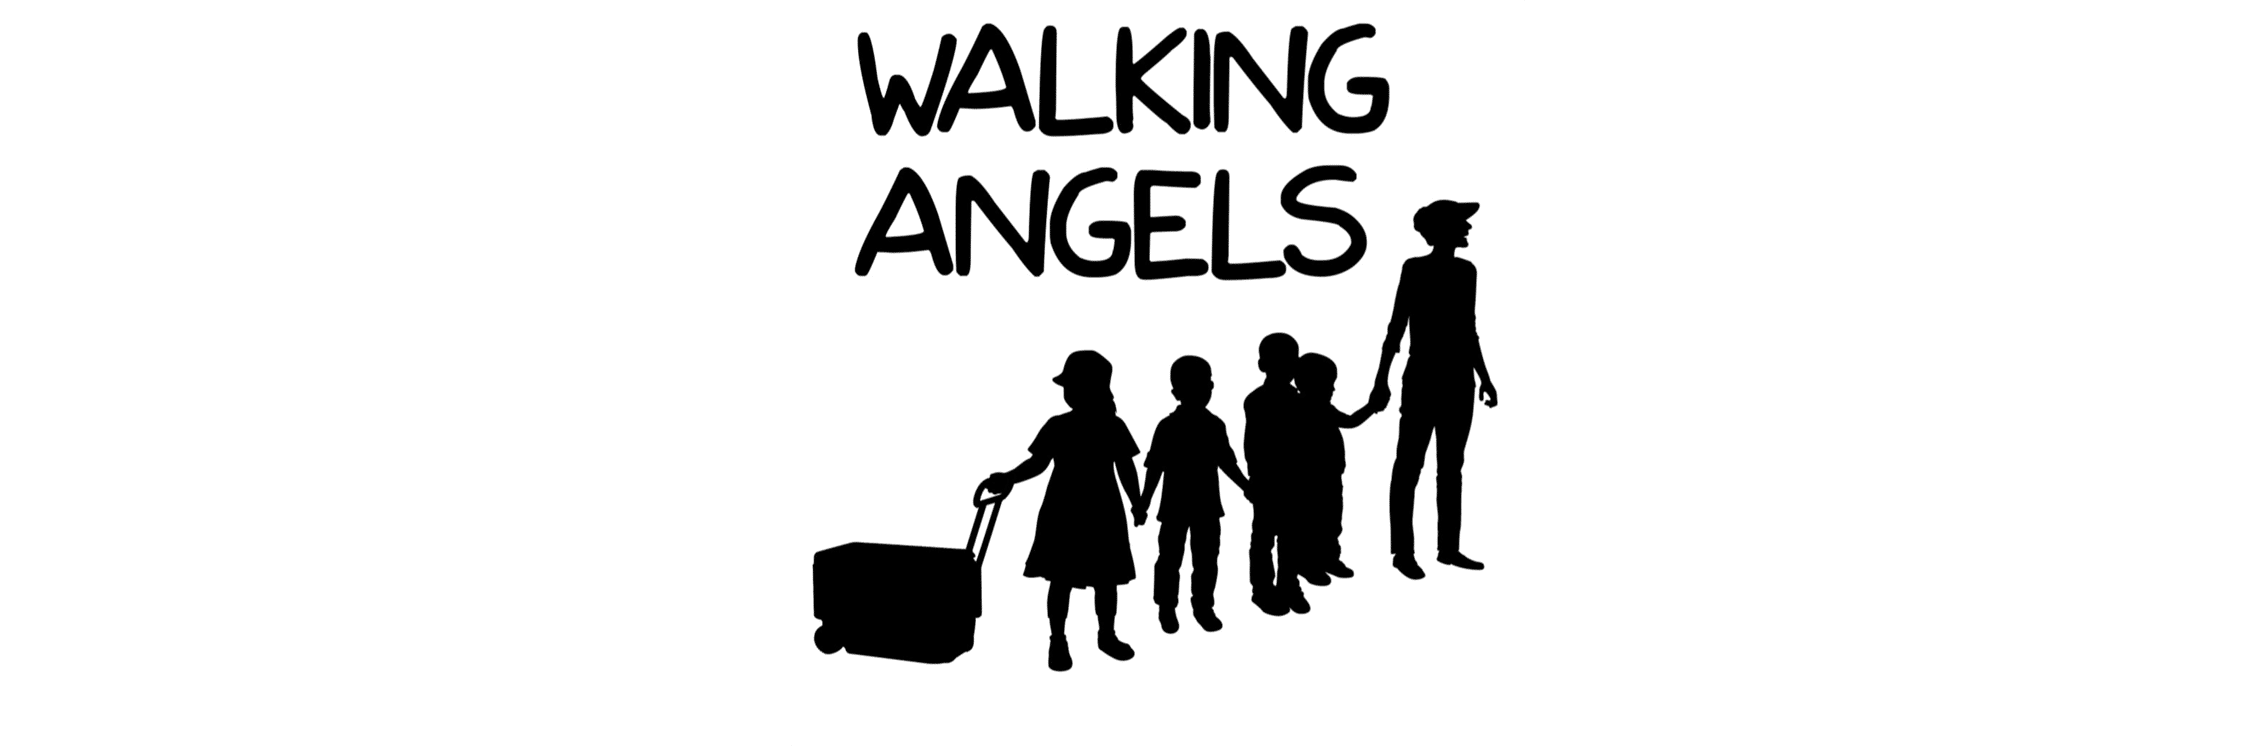 walking angels